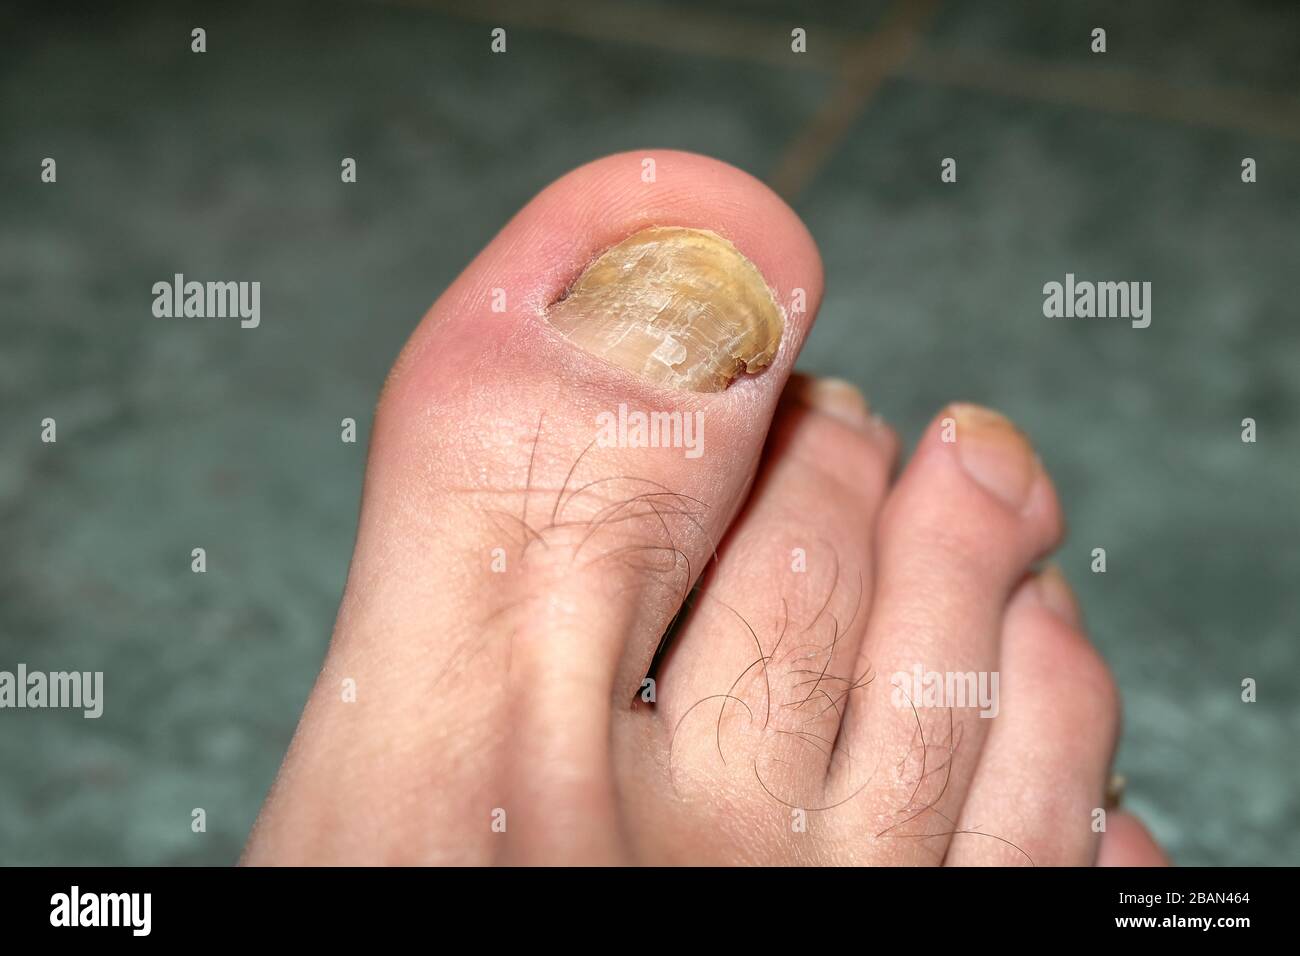 Dirty toe nails -Fotos und -Bildmaterial in hoher Auflösung – Alamy